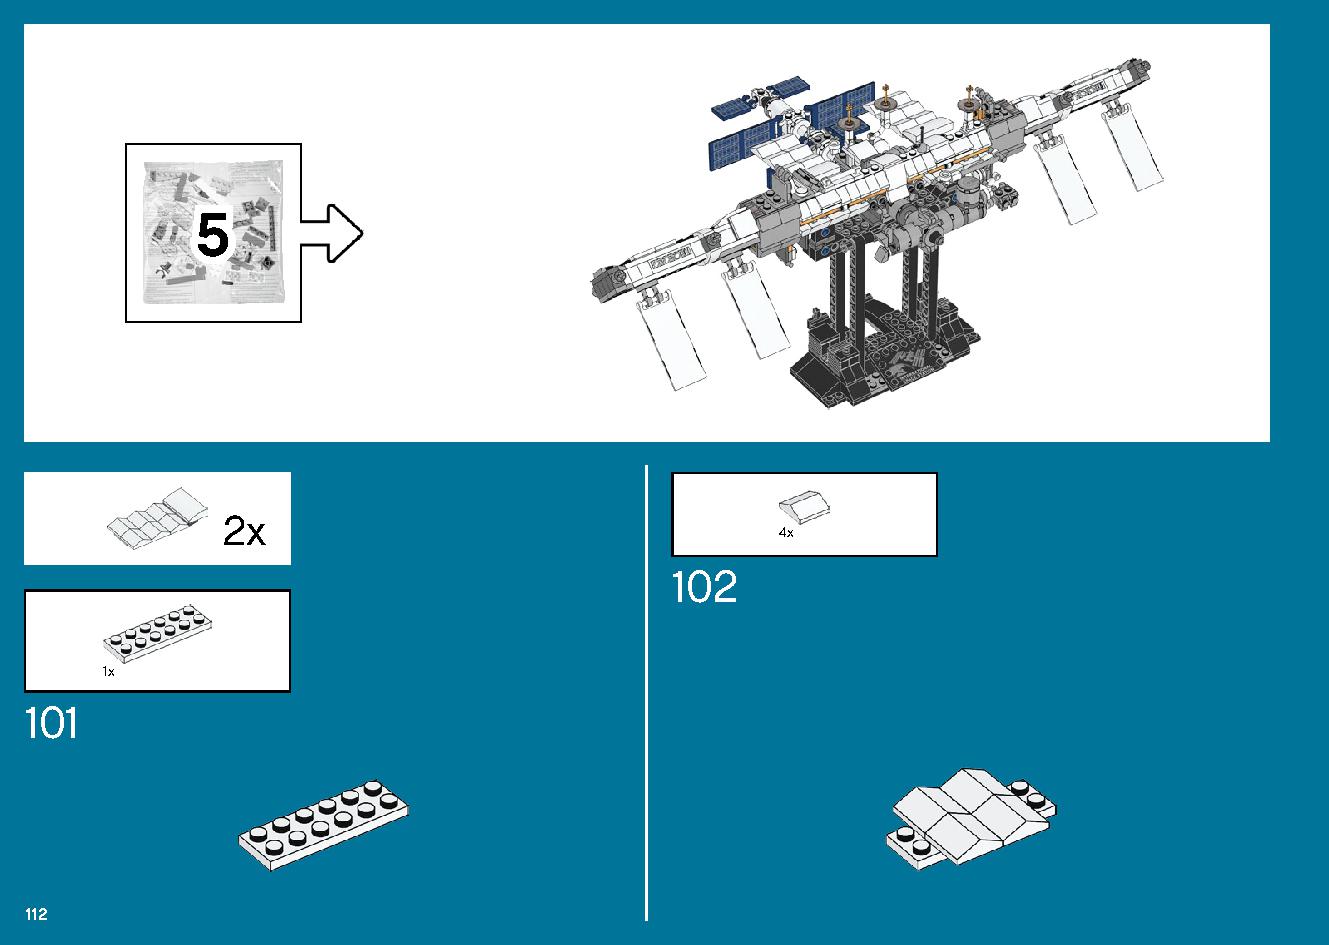 International Space Station 21321 レゴの商品情報 レゴの説明書・組立方法 112 page